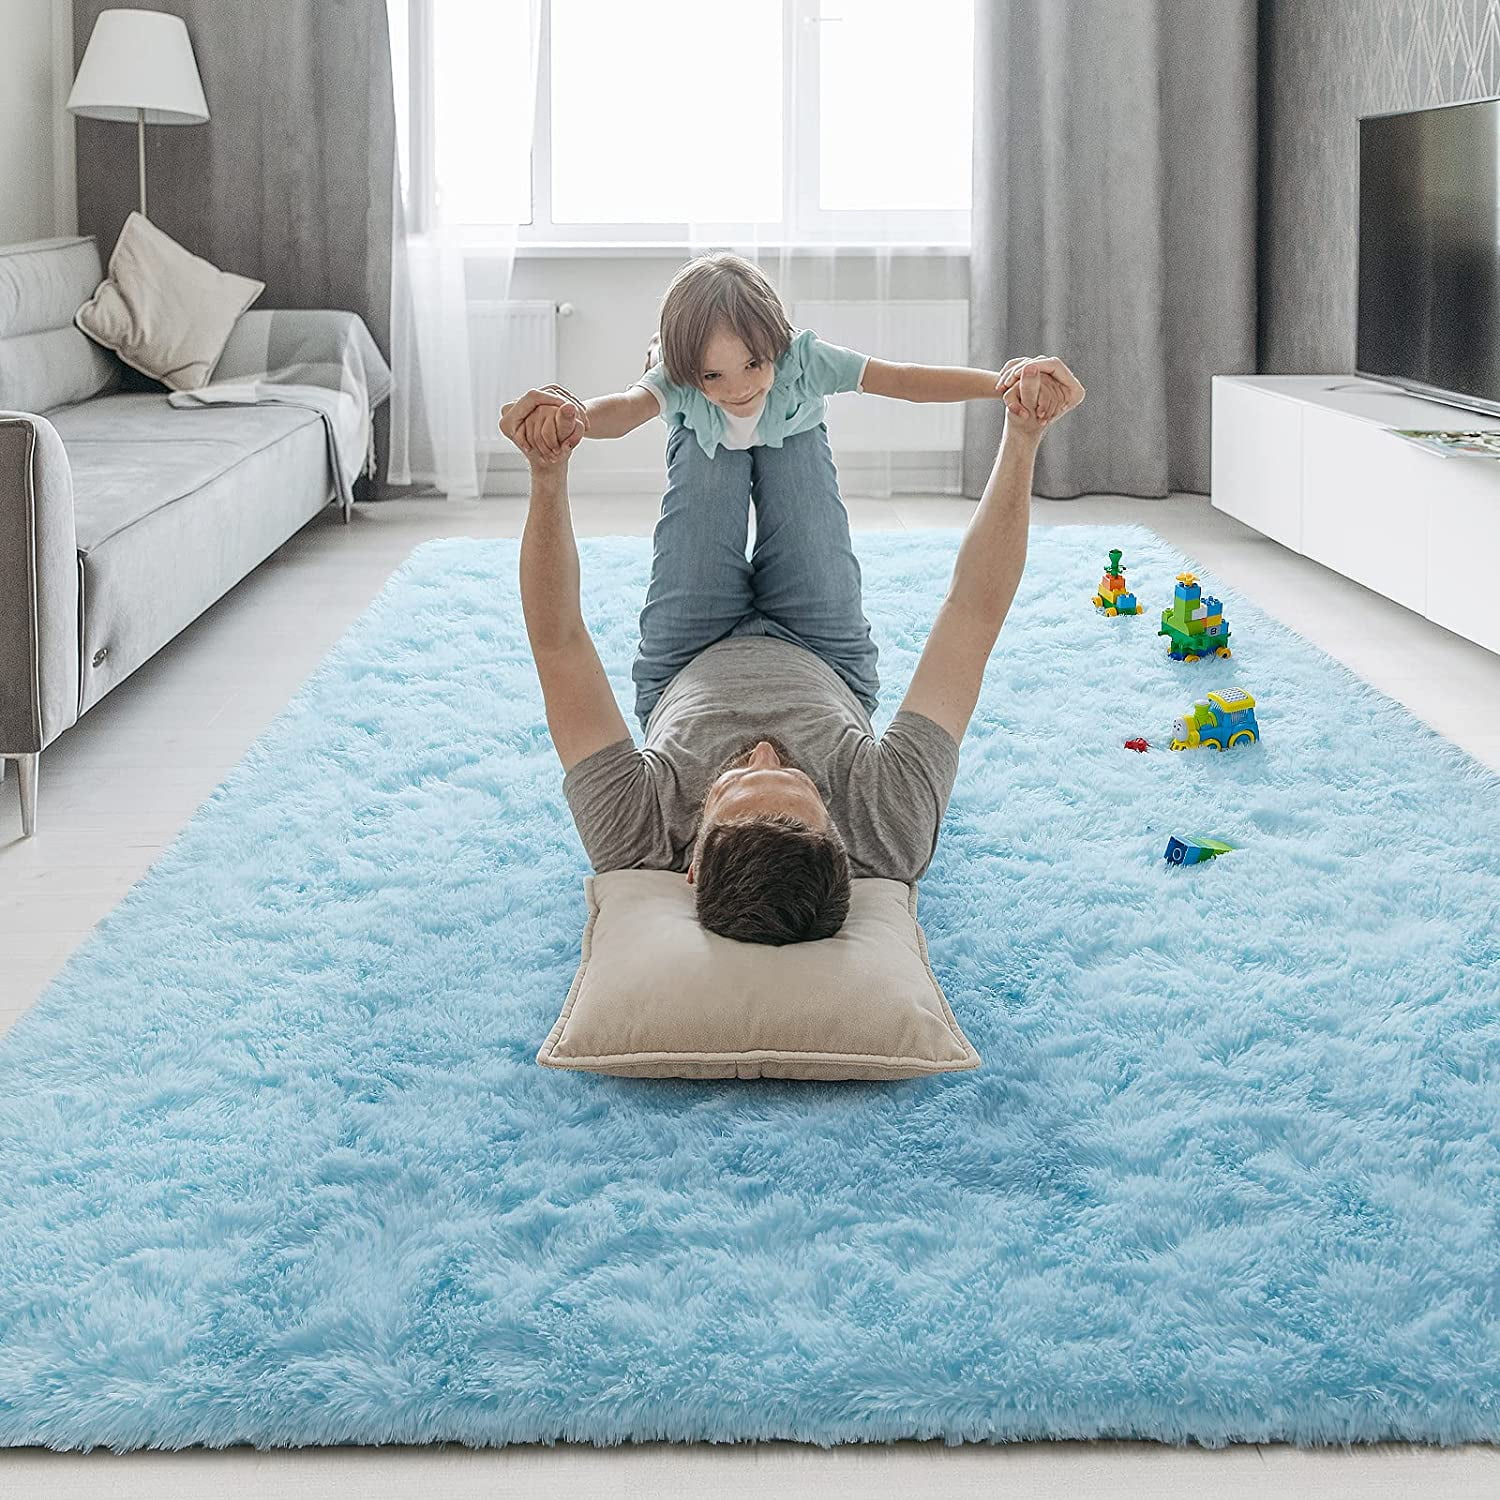 Lochas Soft Shag Carpet Fluffy Rug for Living Room Bedroom Big Area Rugs  Floor Mat Home Decor, 4'x6',Lavender Purple